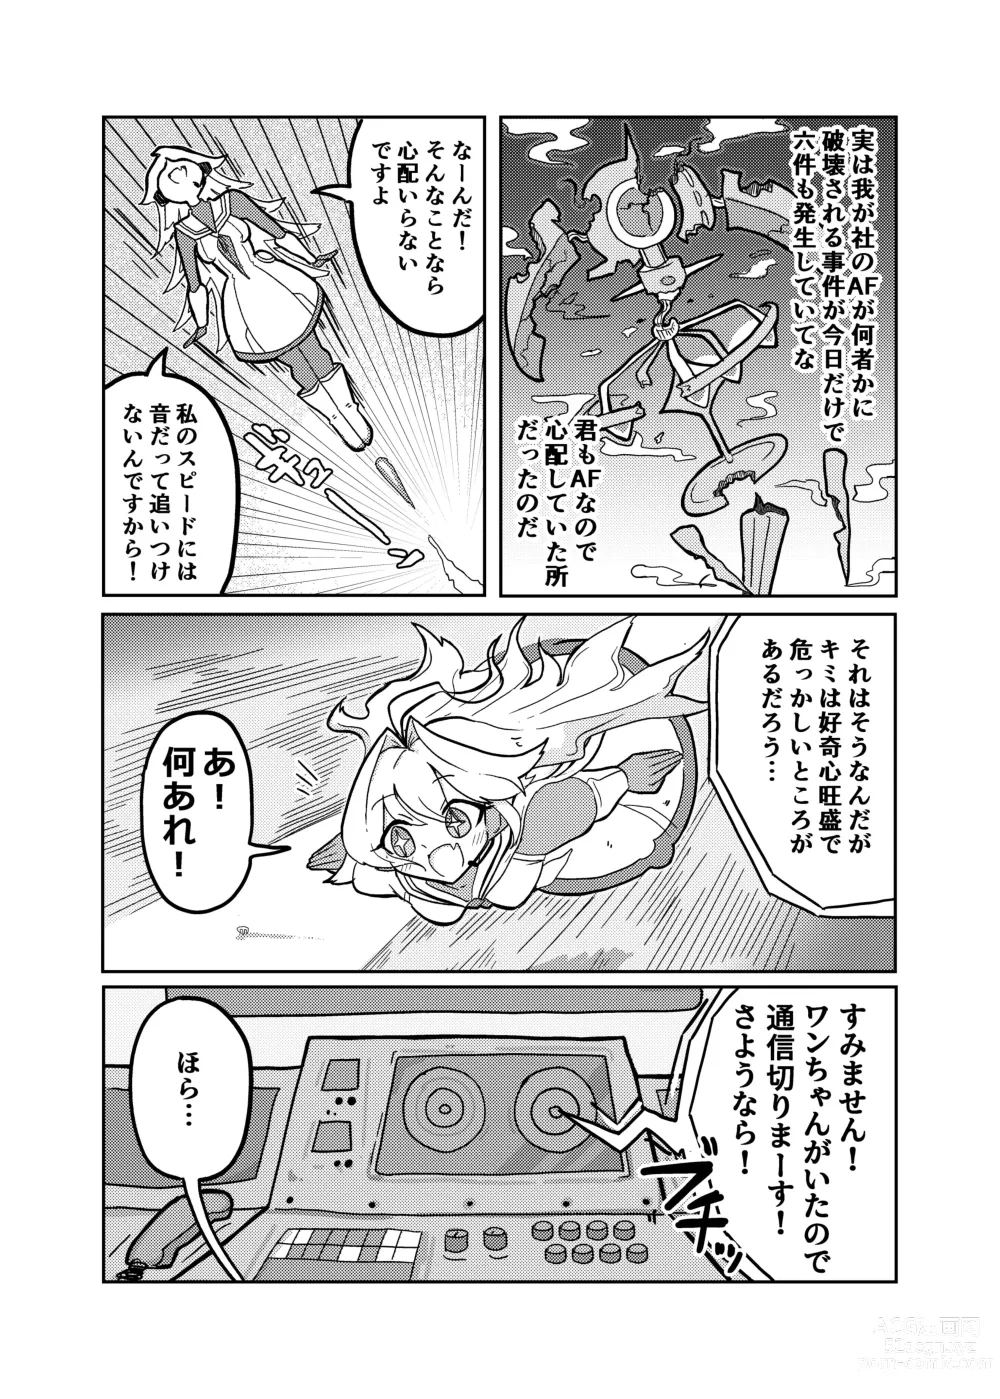 Page 4 of doujinshi Ralmia vs Robopup